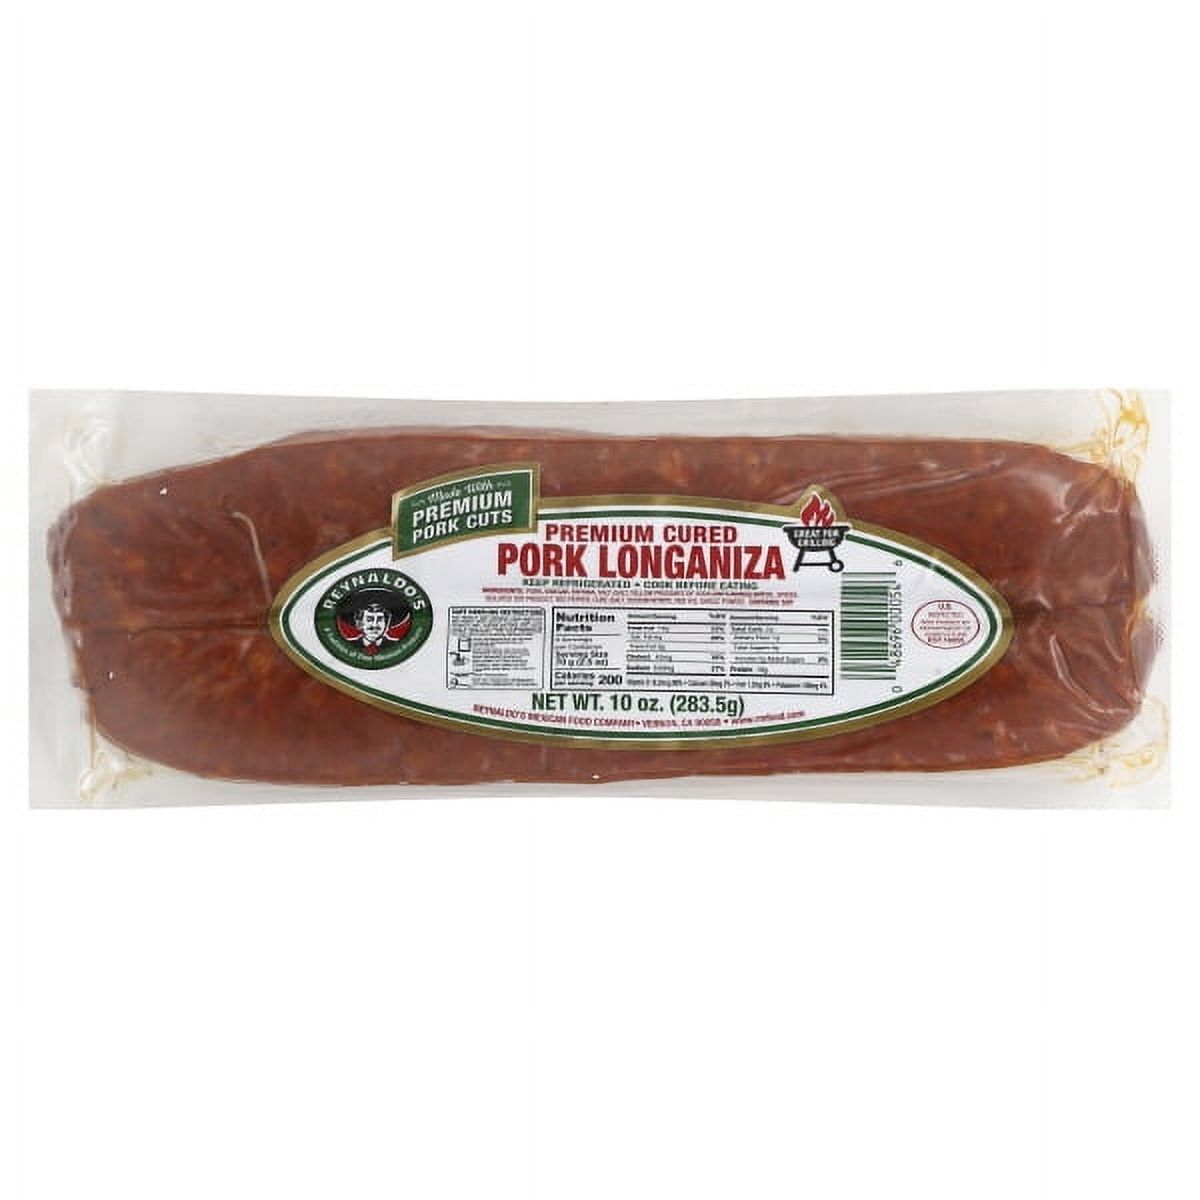 Reynaldo's Cured Pork Longaniza Sausage, 10 oz